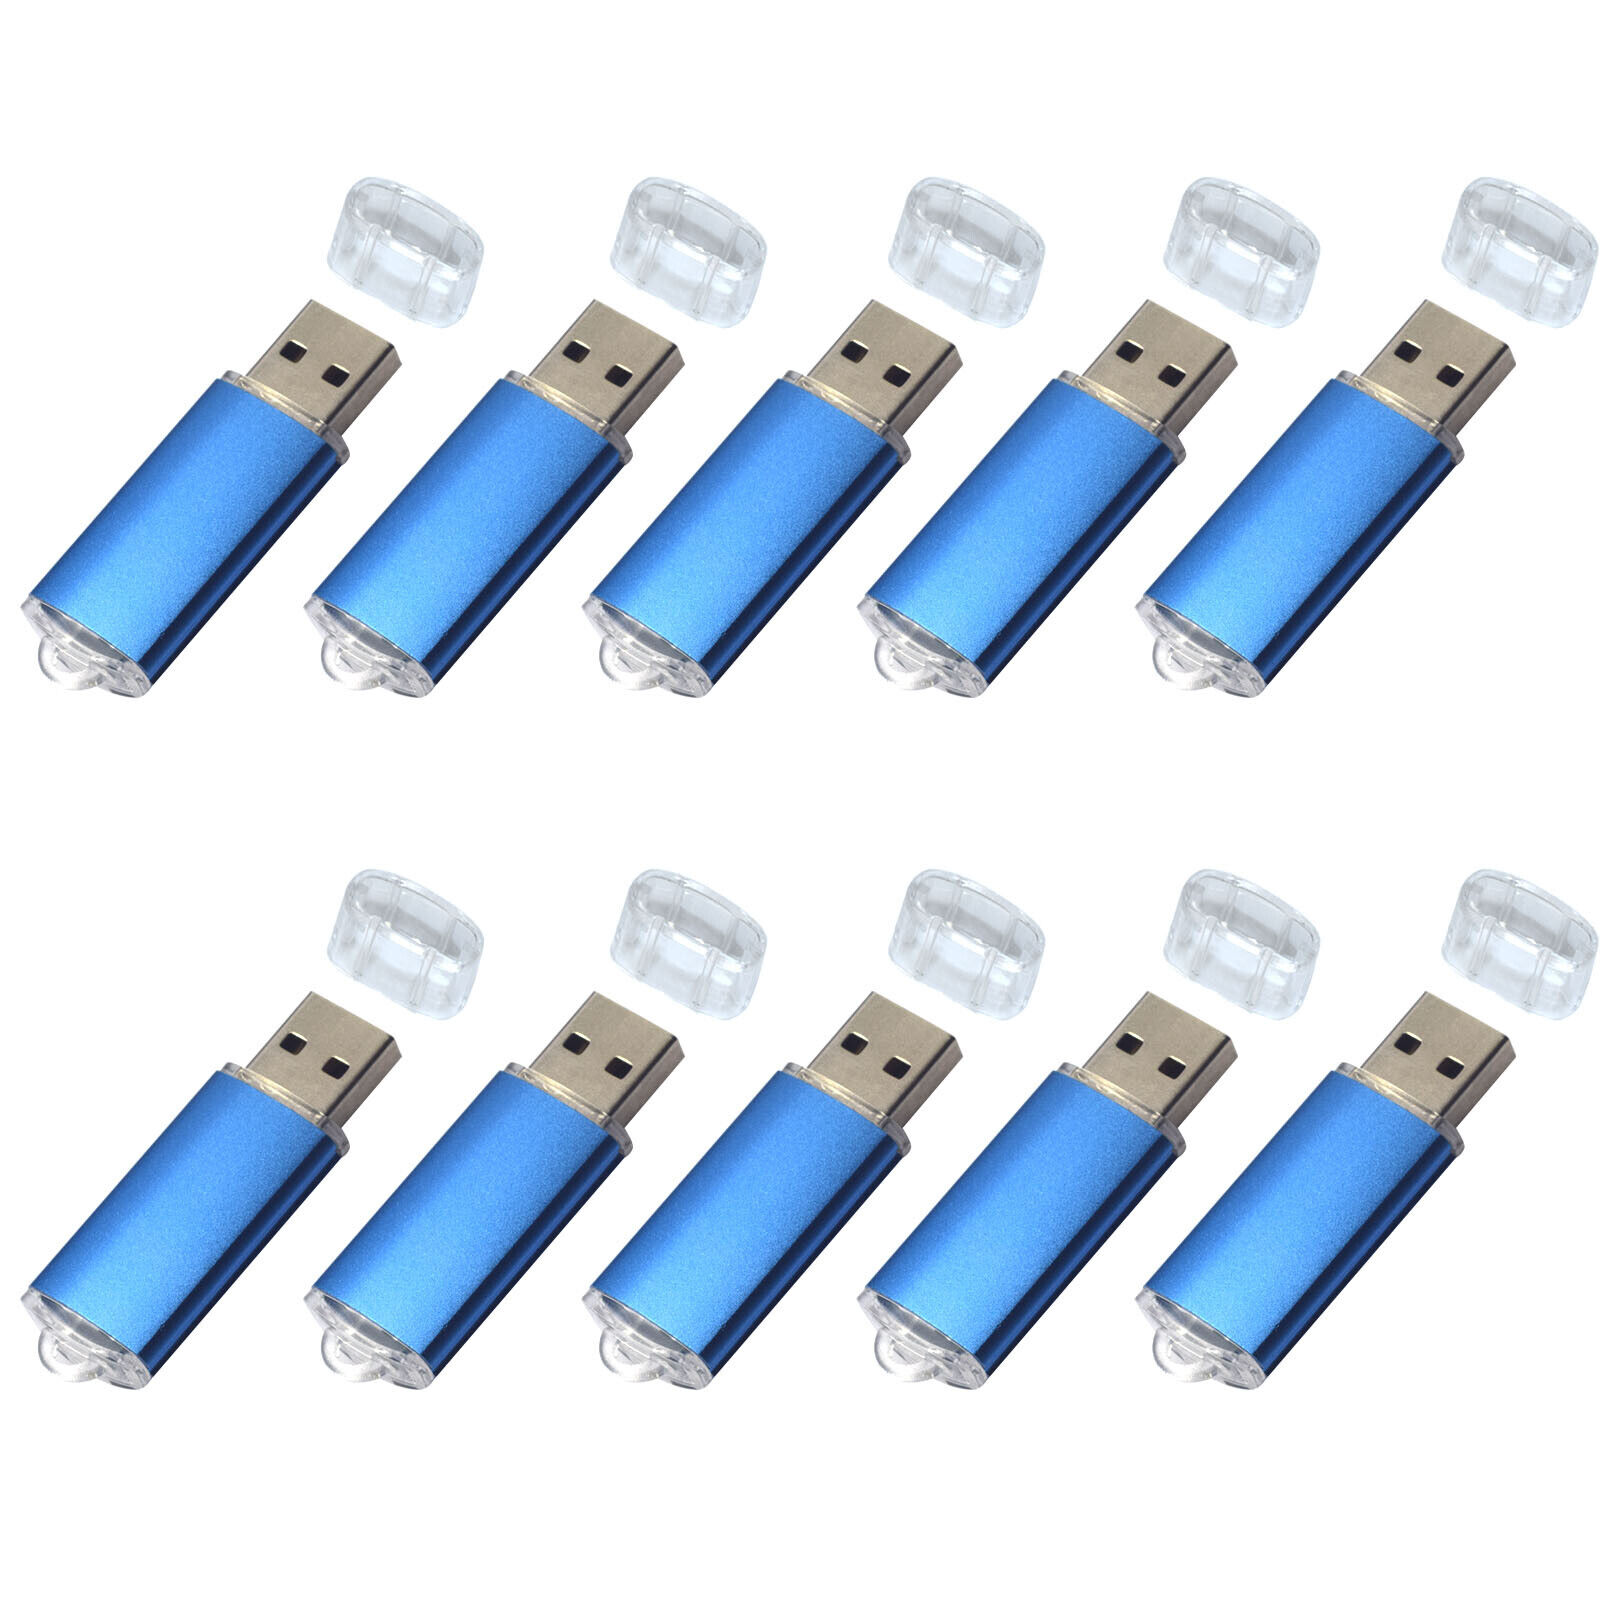 Kootion 30 Unites USB 2.0 8GB USB Flash Drive Memory Storage External Drive Pack